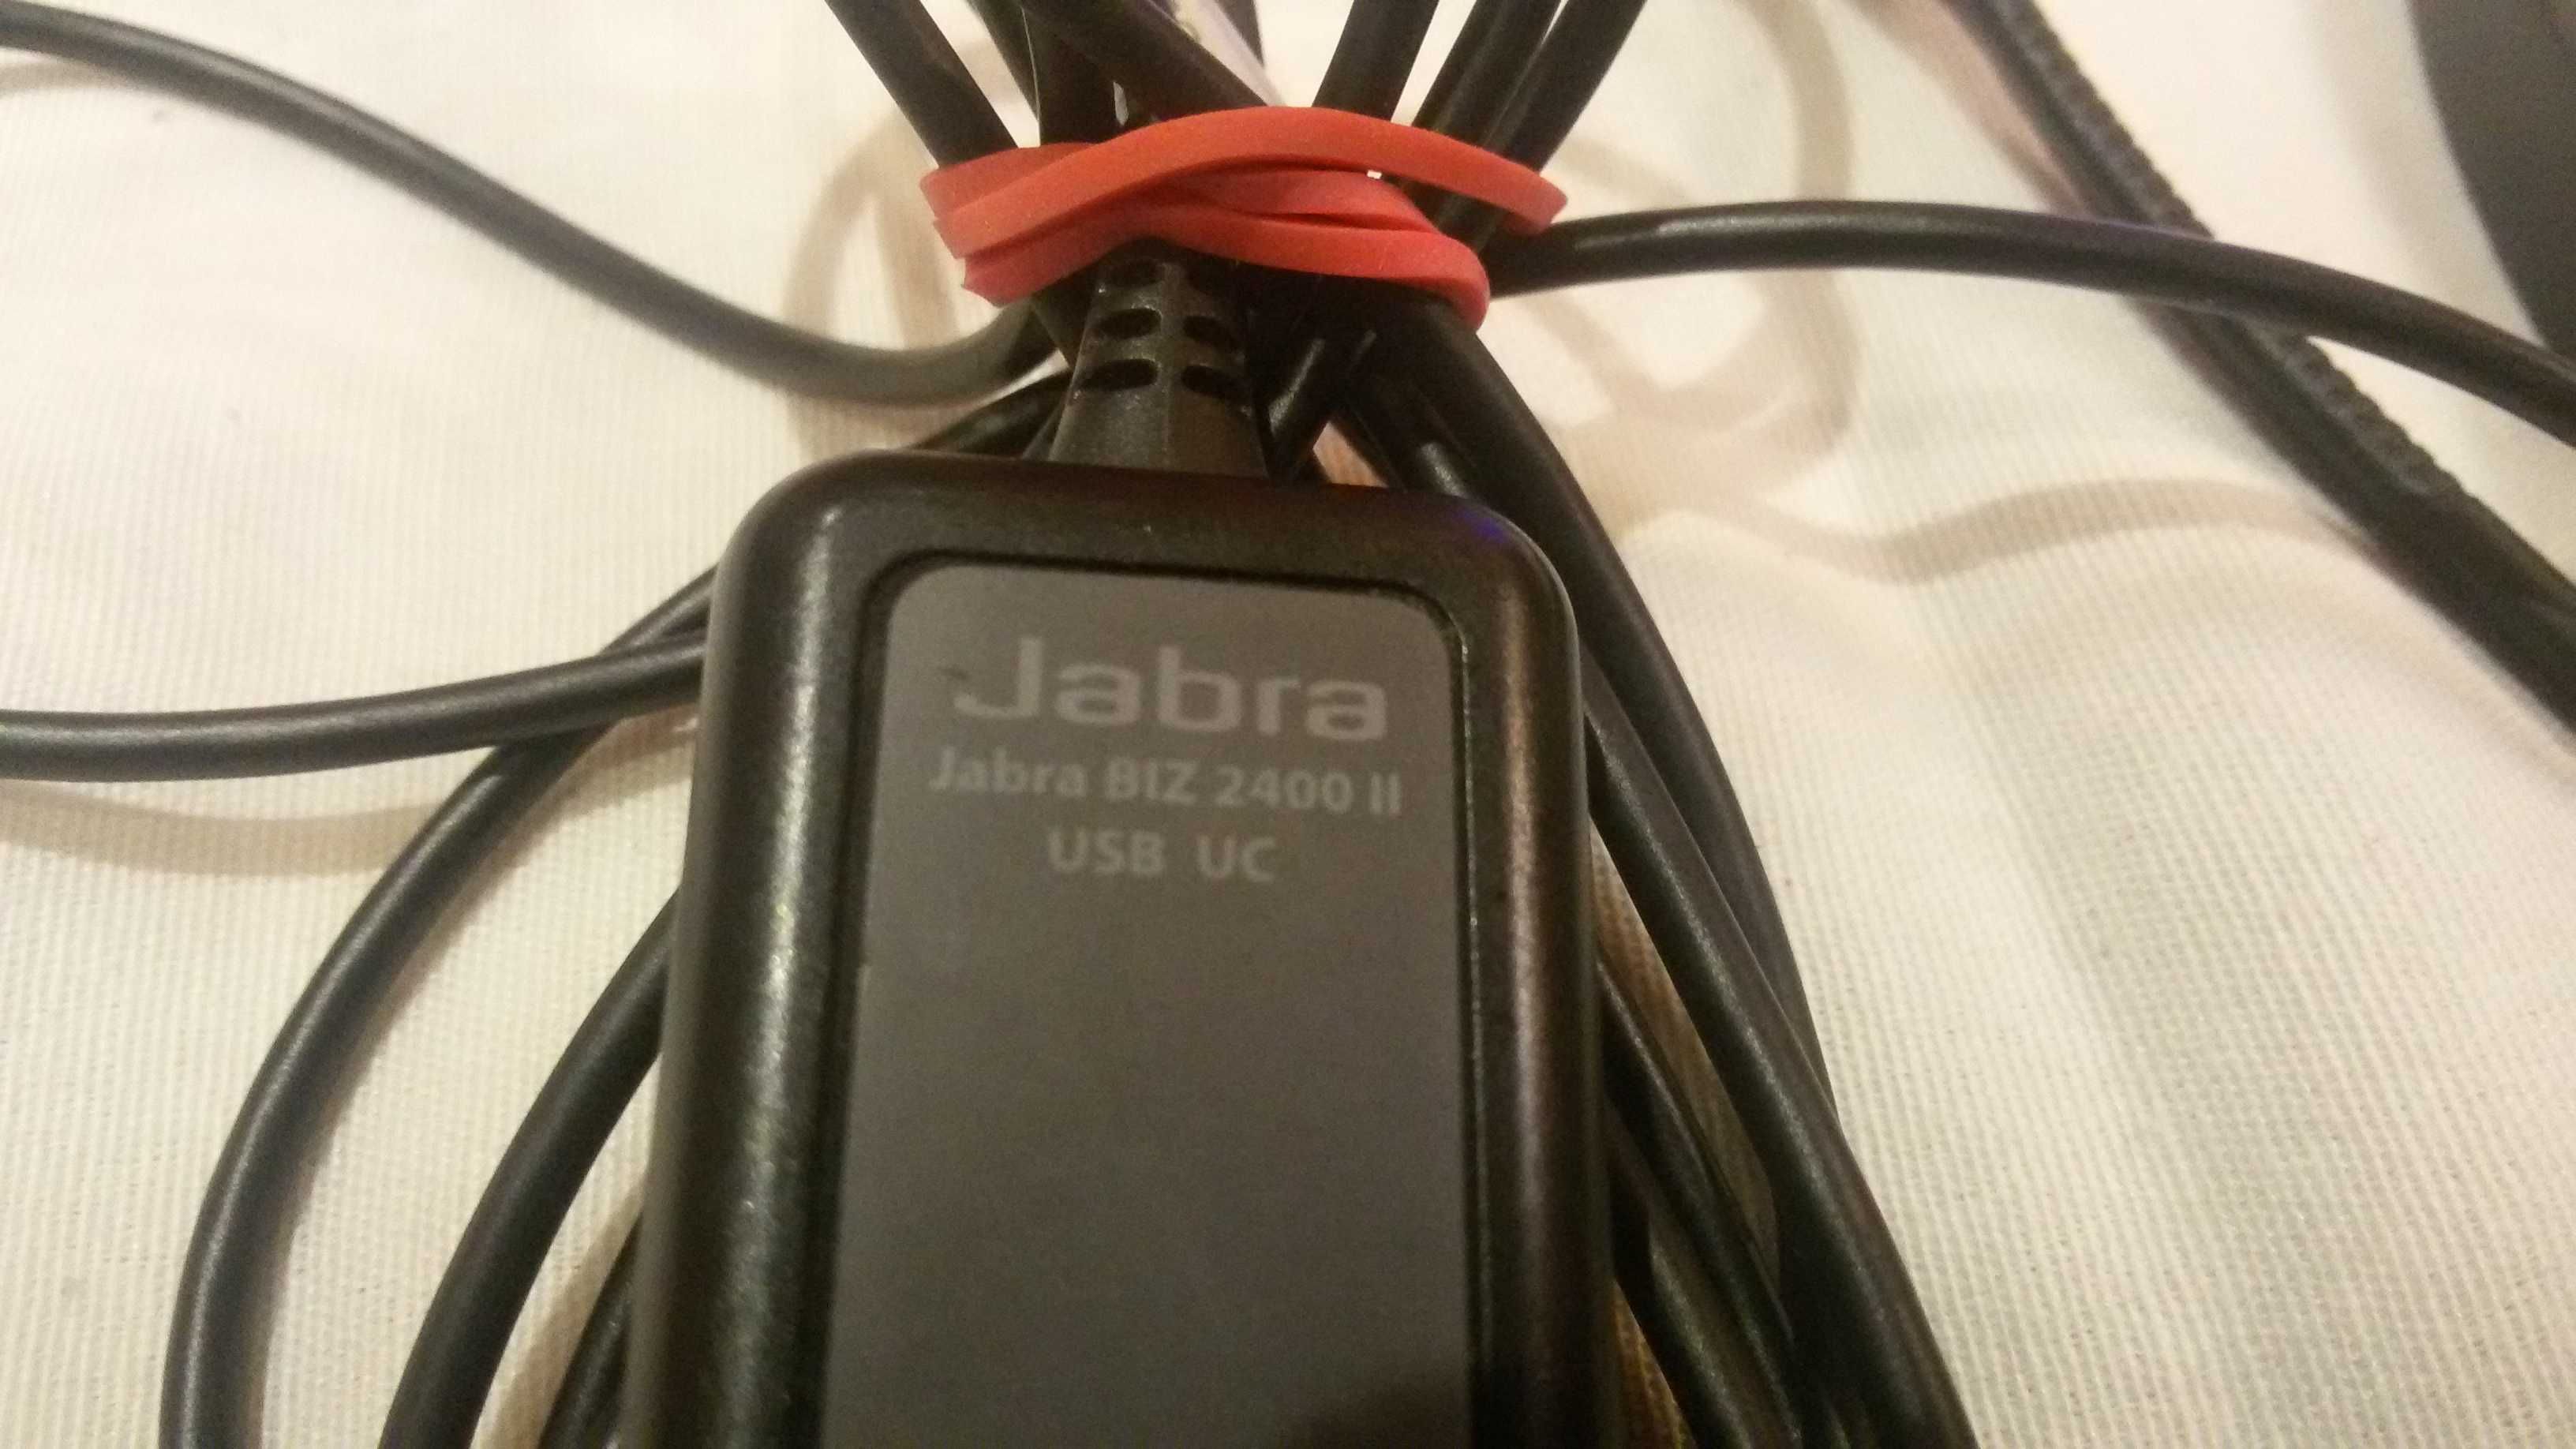 Jabra BIZ 2400 II USB Duo MS NC слушалки с микрофон